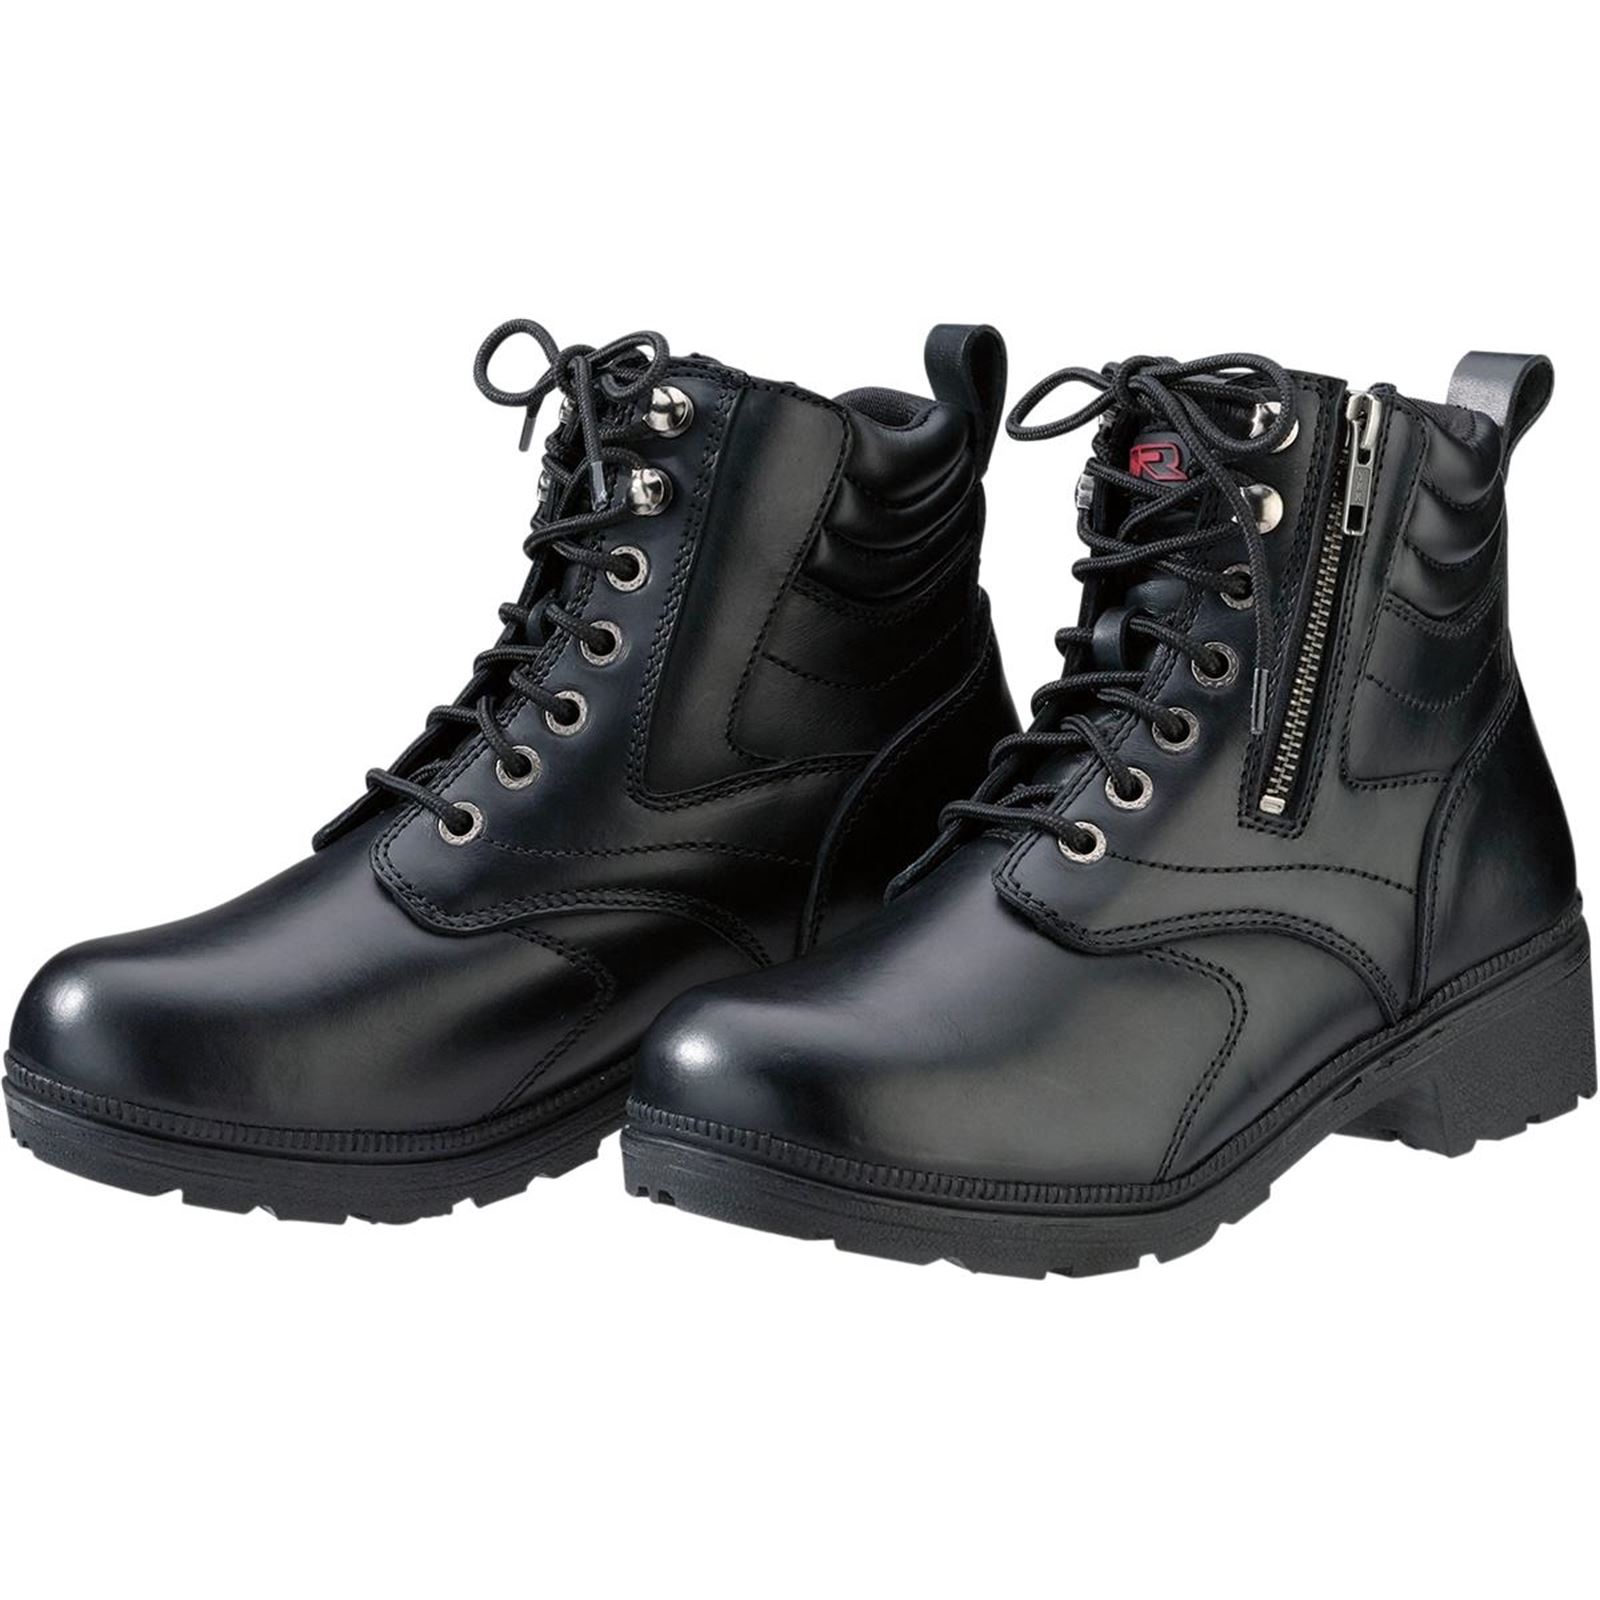 Z1R Women's Maxim Boots - Black - Size 8.5